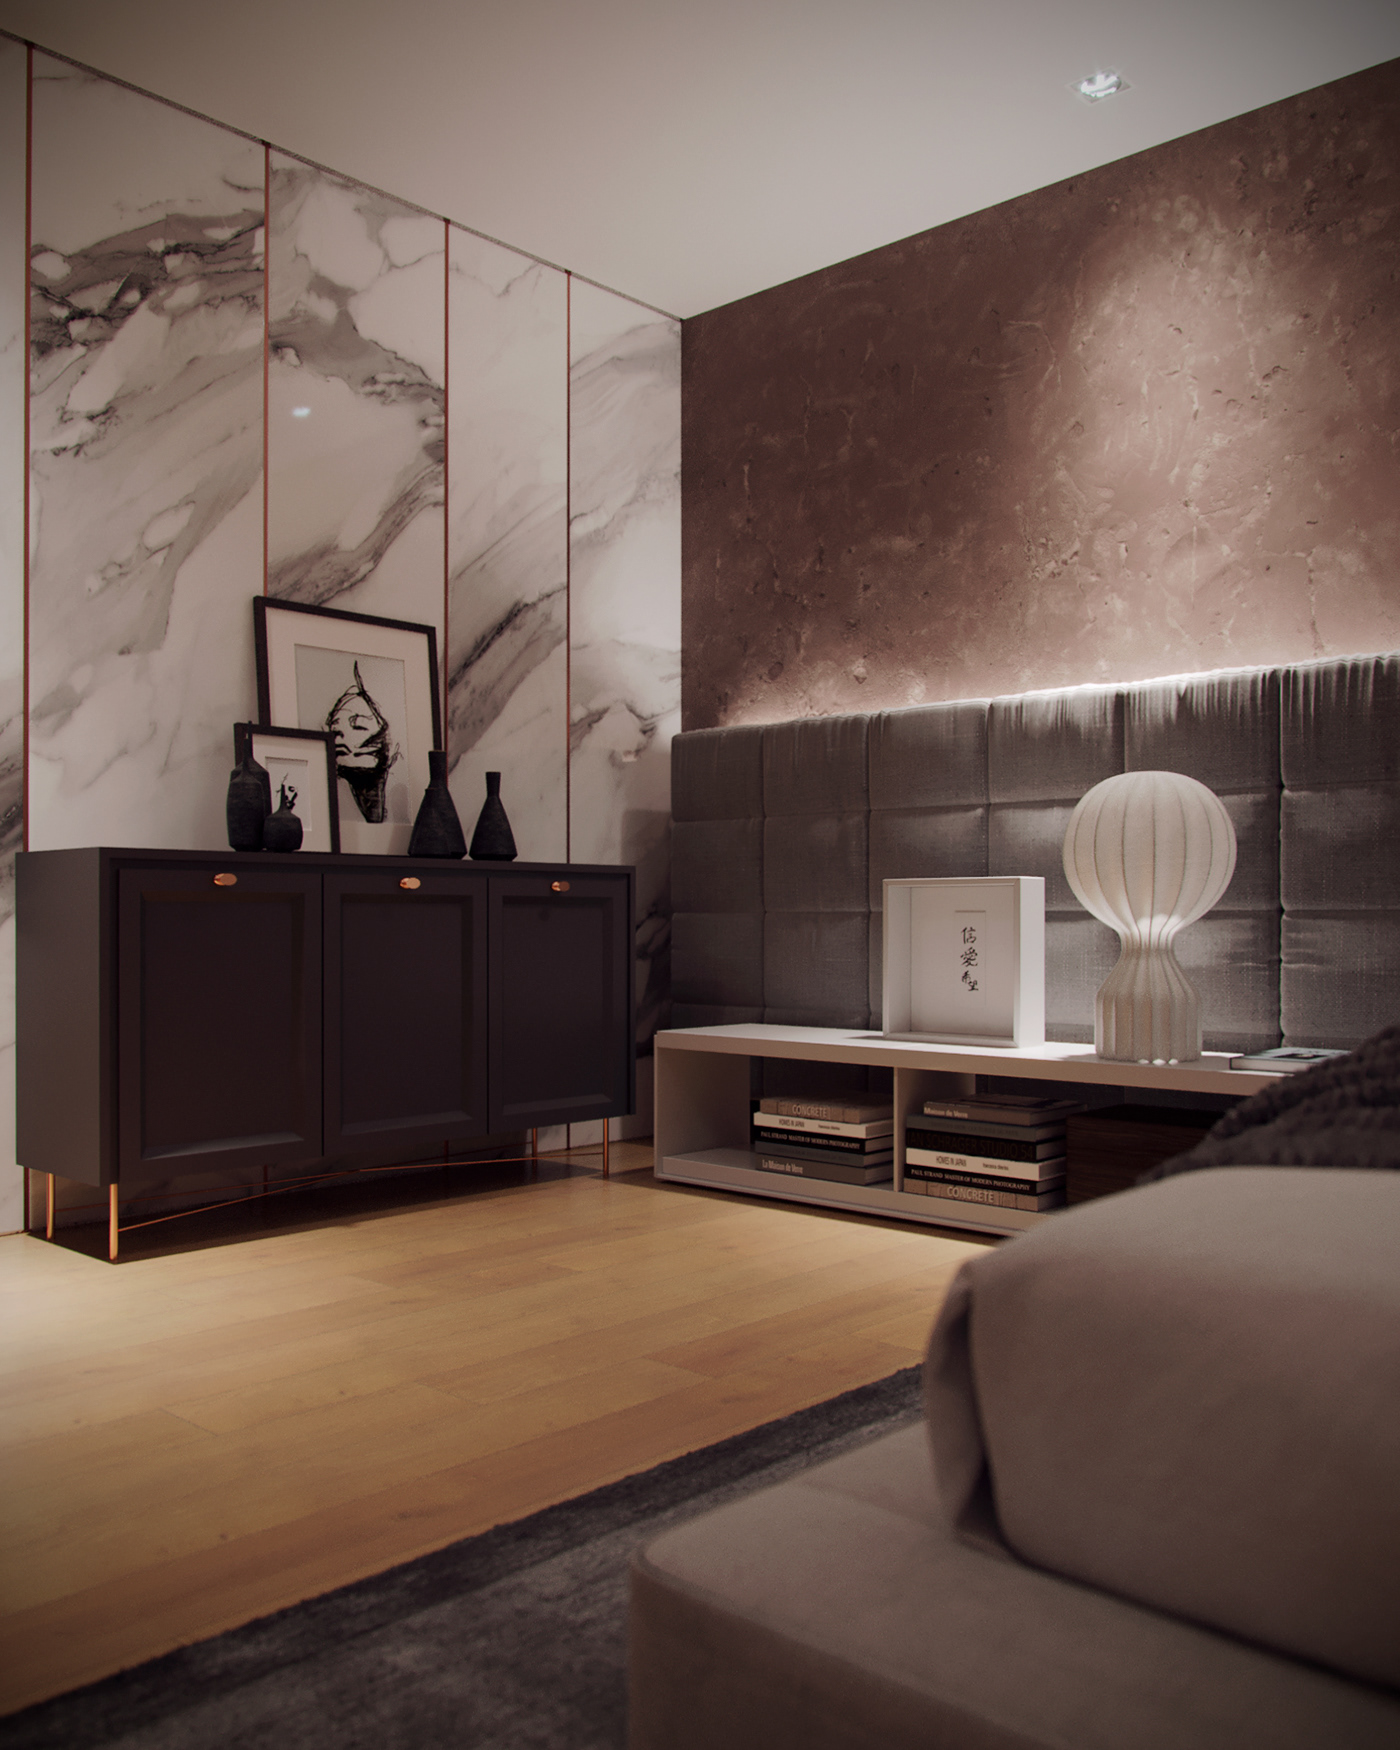 bedroom decor home InterioDesign Interior interiorarchitecture light luxuryinterior night stylish